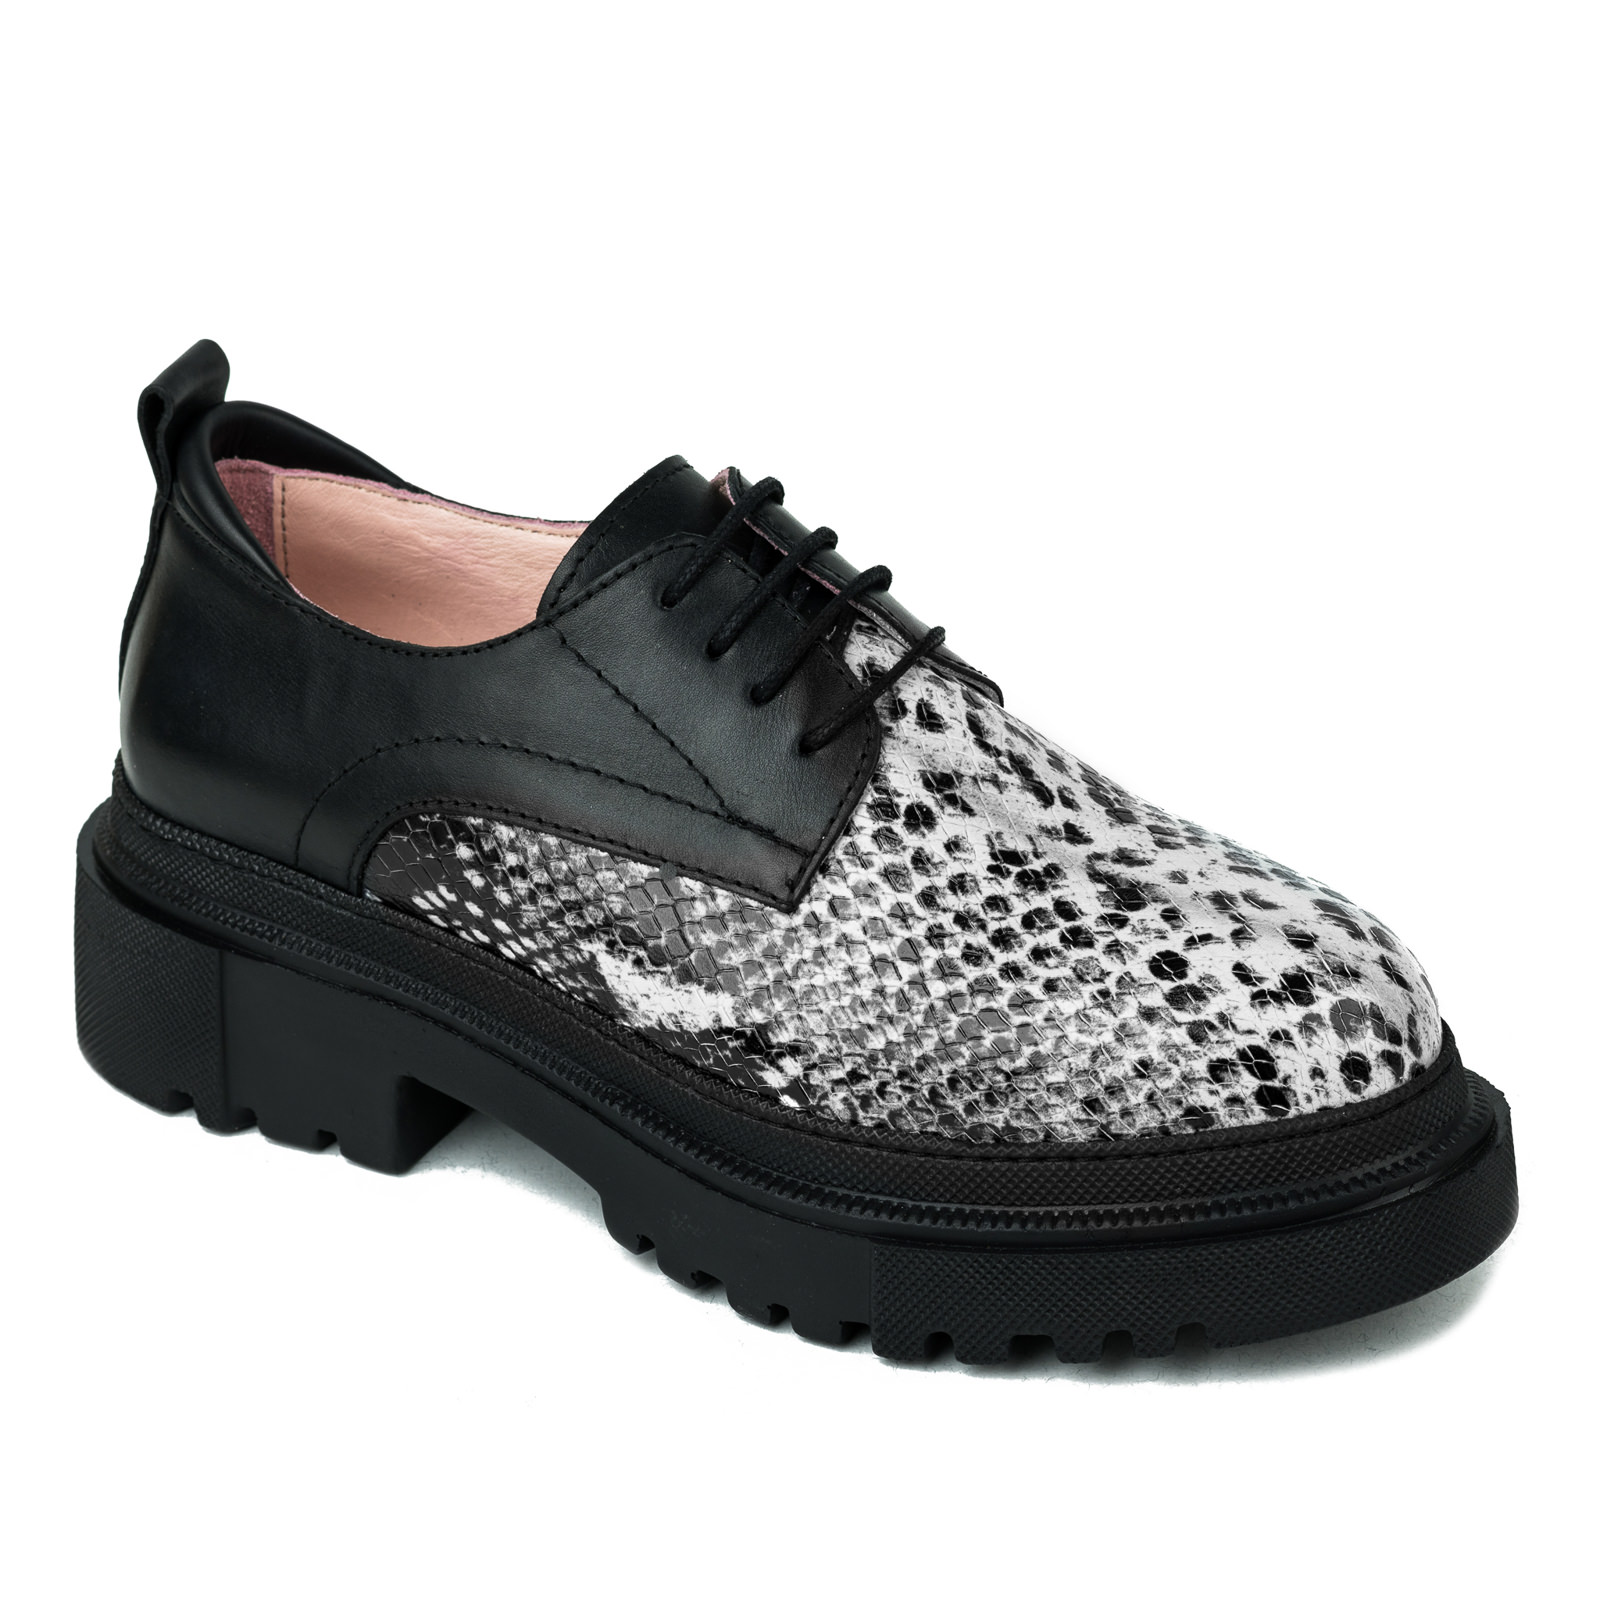 Leather shoes & flats B032 - BLACK